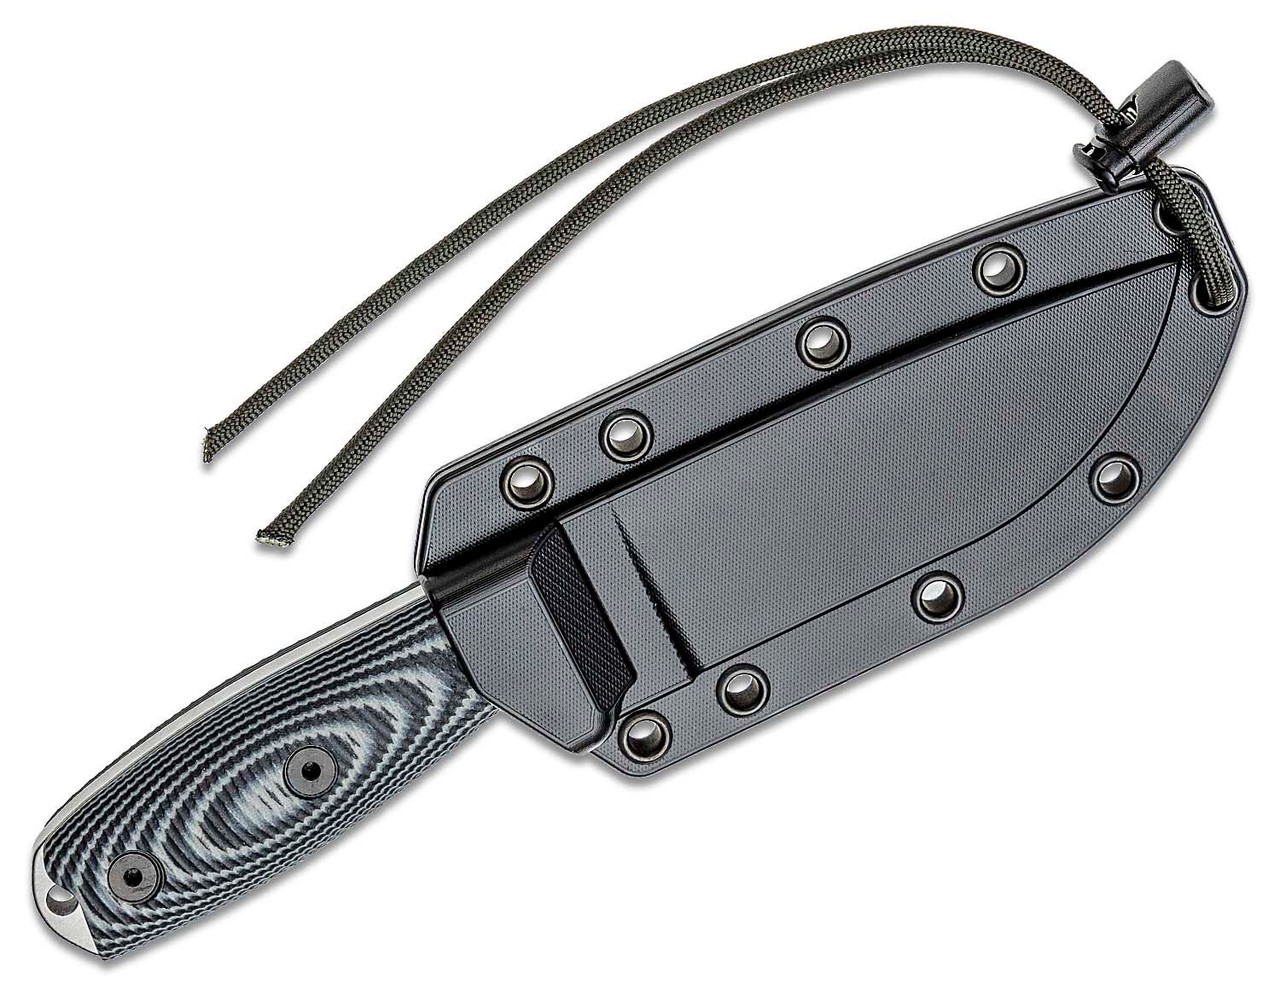  ESEE Knives ESEE-4P35V-002 S35VN Stainless Plain Edge, 3D Machined Gray/Black G10 Handles, Black Sheath, Clip Plate